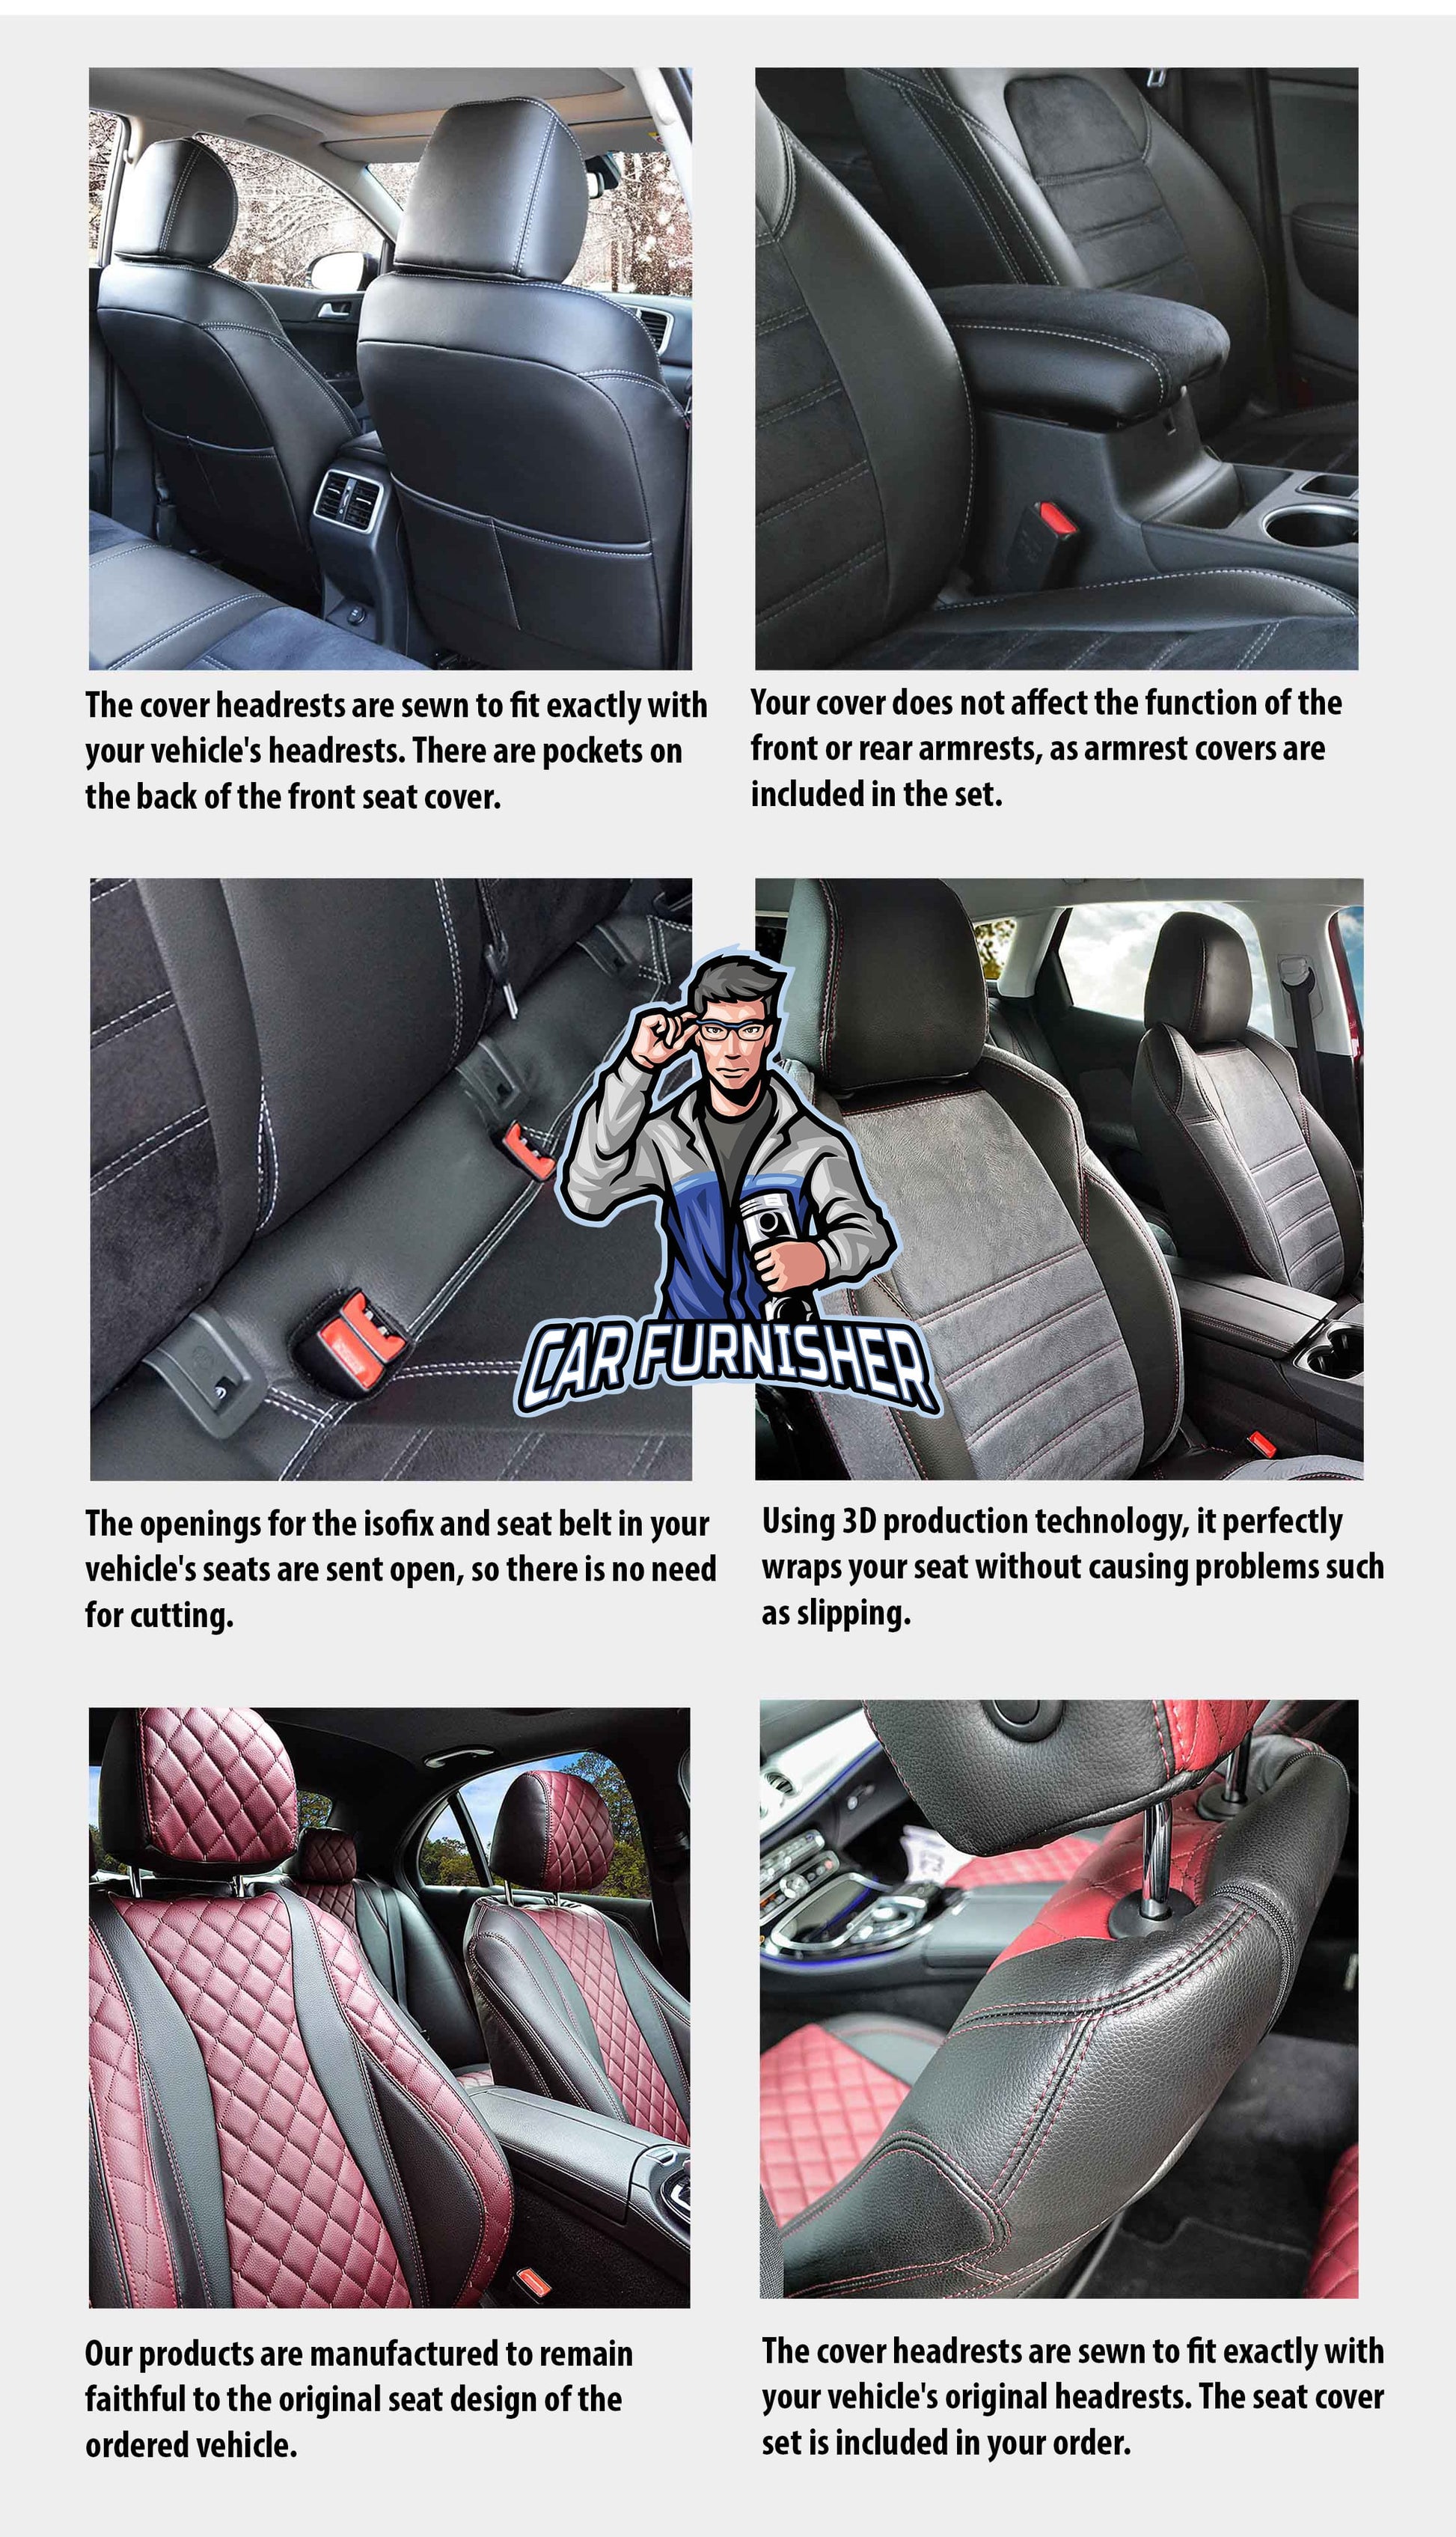 Peugeot 208 Seat Covers Paris Leather & Jacquard Design Red Leather & Jacquard Fabric